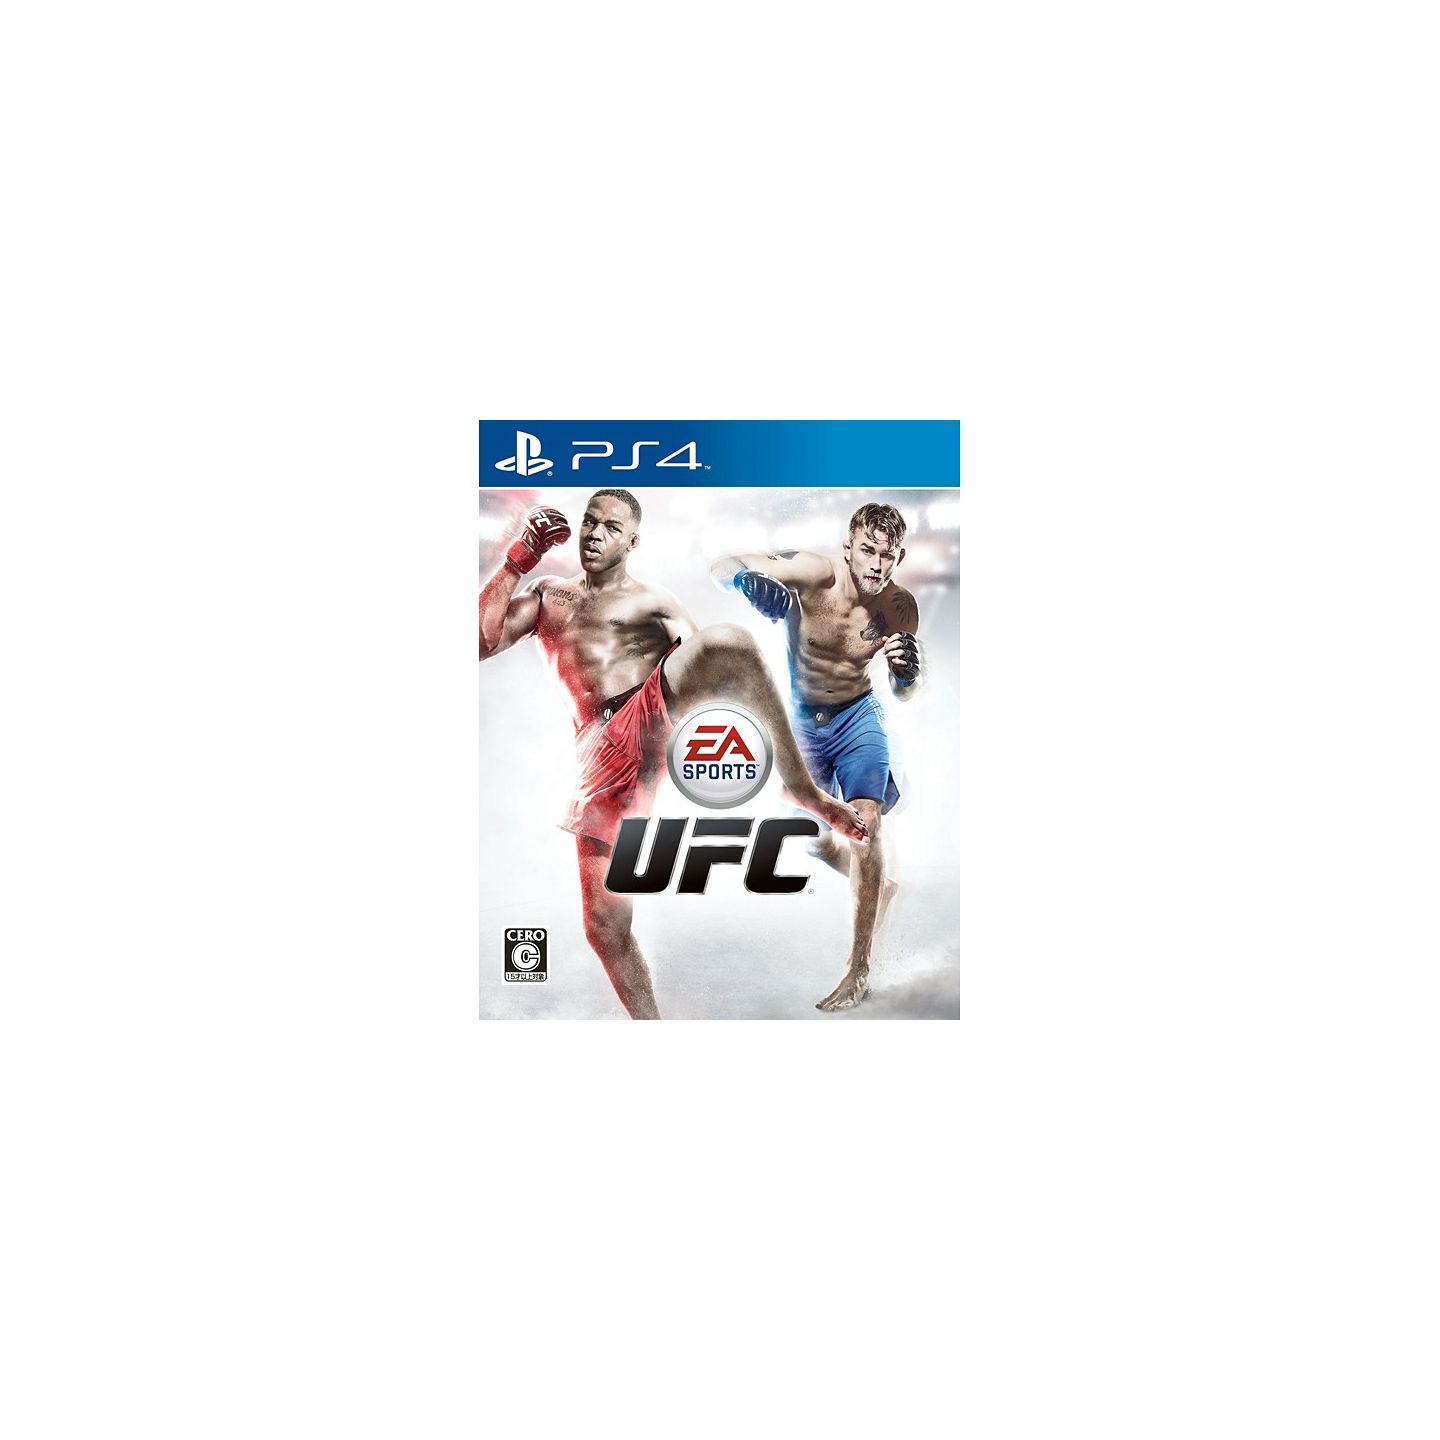 EA SPORTS UFC PlayStation 4 PS4